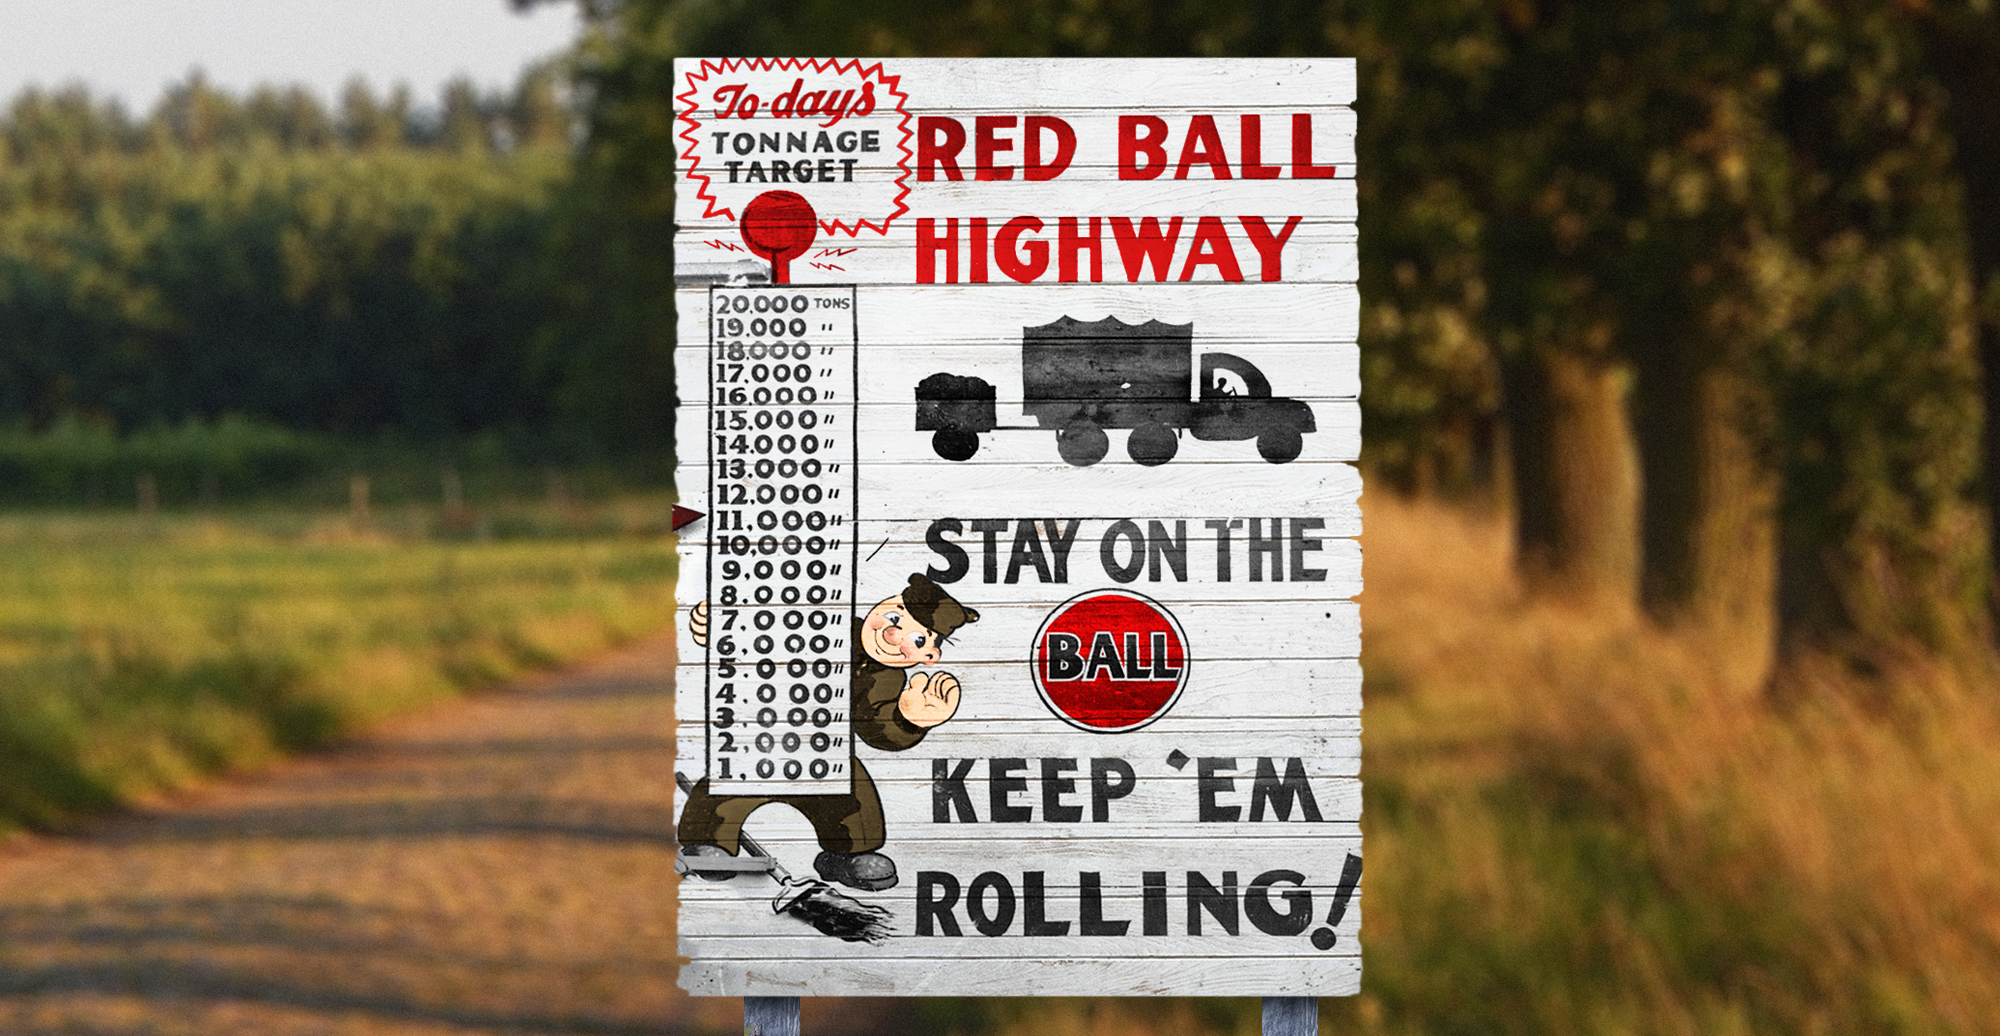 [GB Ravitaillement] Red Ball Express - Jeep + GMC Heller/Airfix Redballhighway